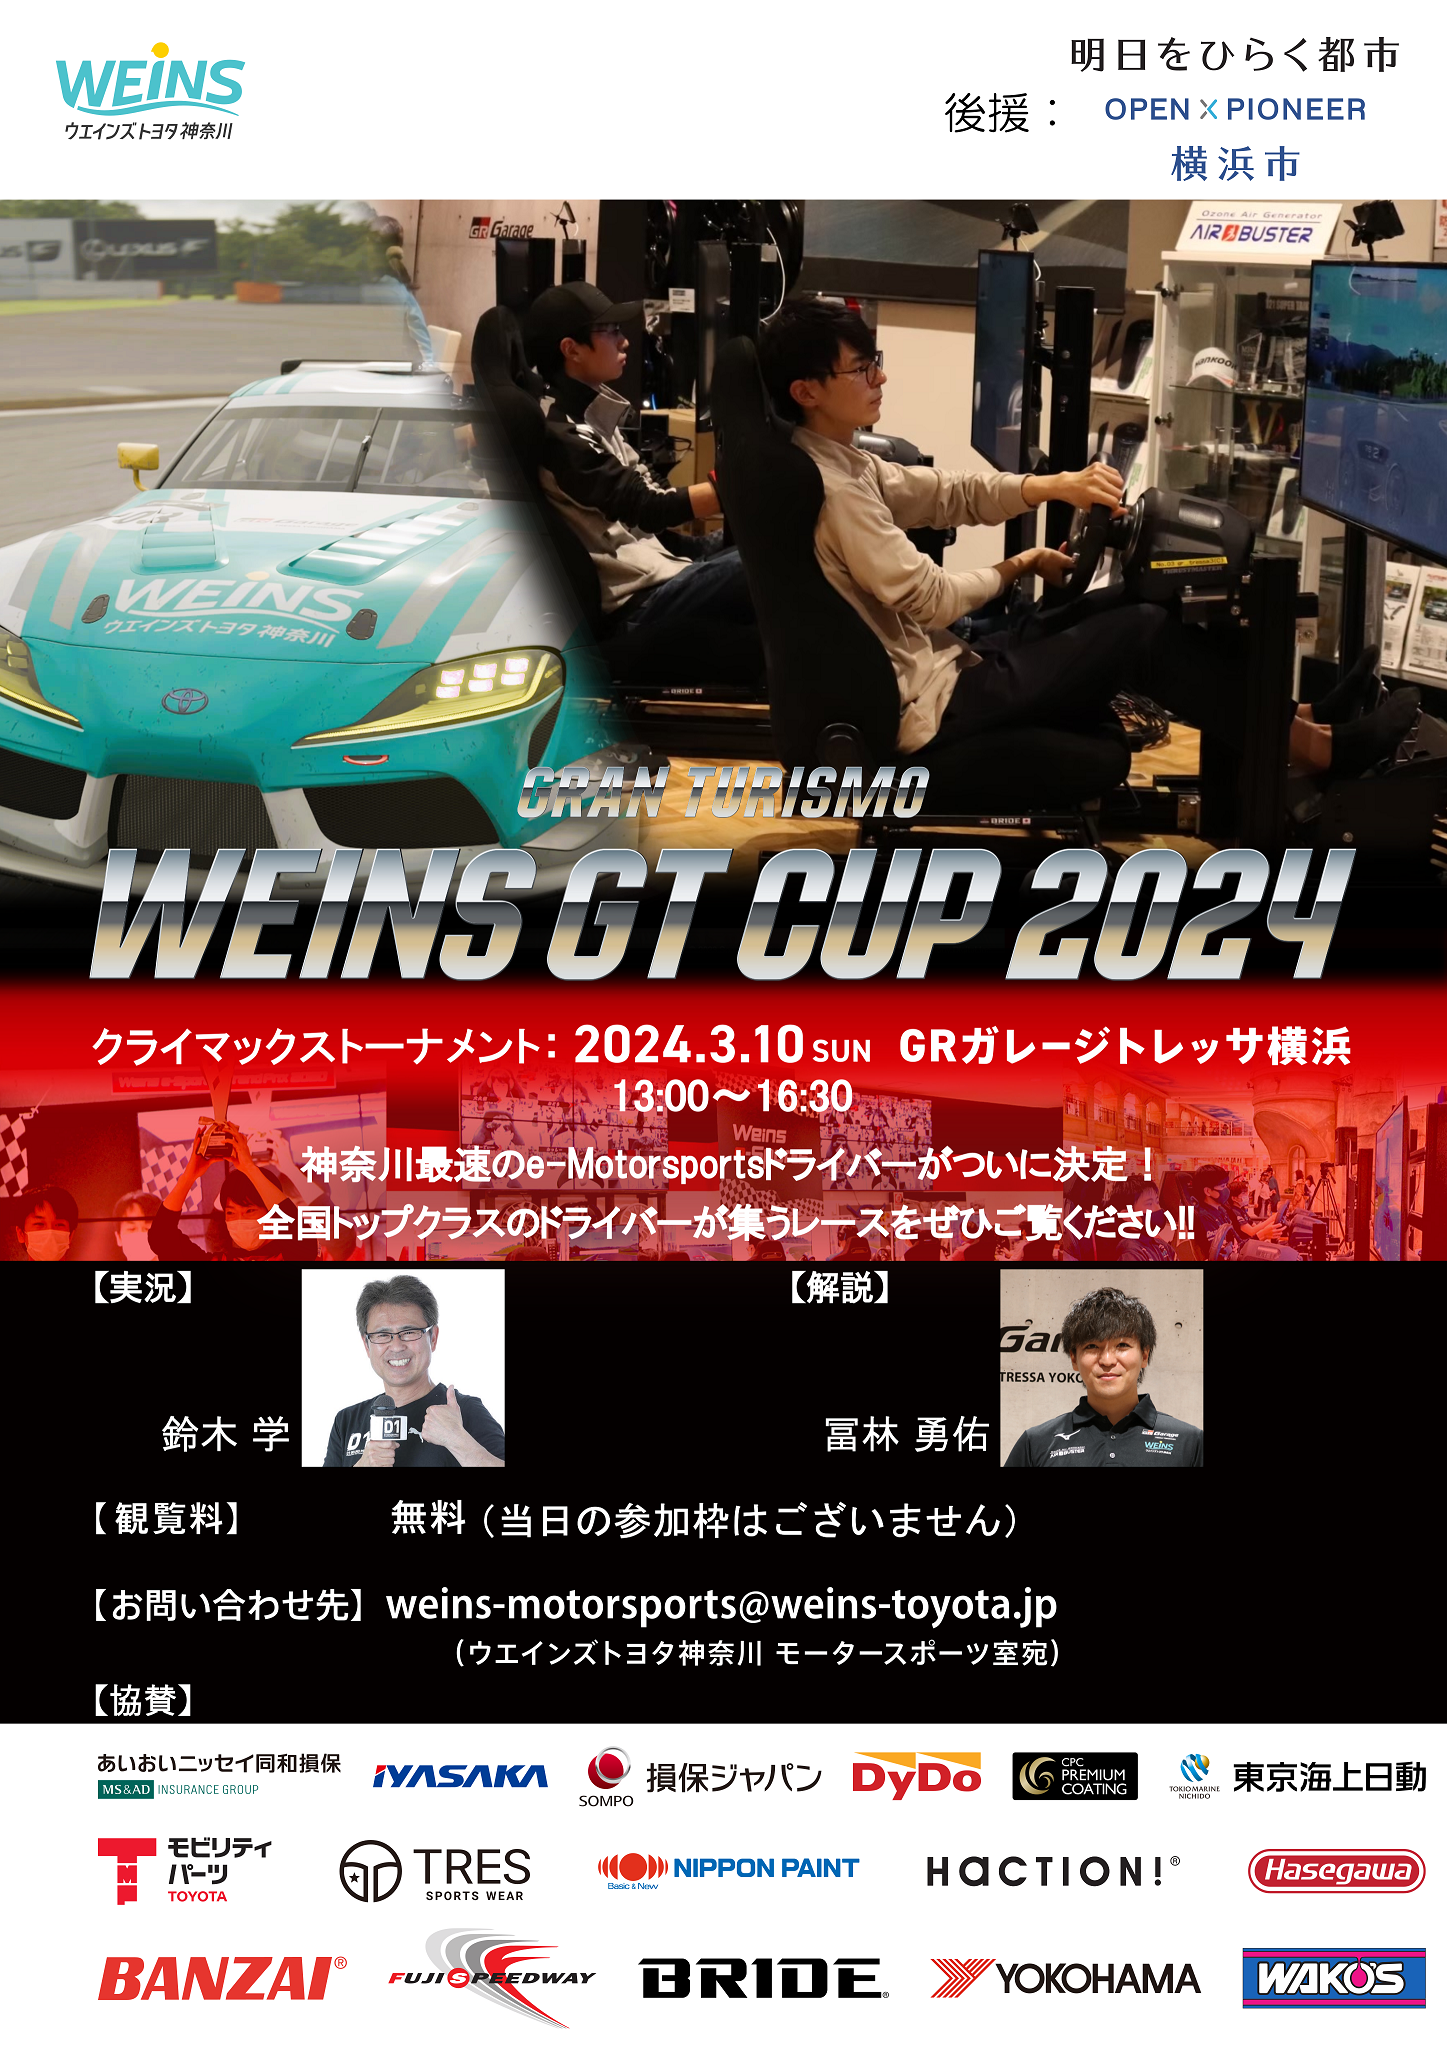 WEINS GT CUP 2024 クライマックストーナメントin GRガレージトレッサ横浜